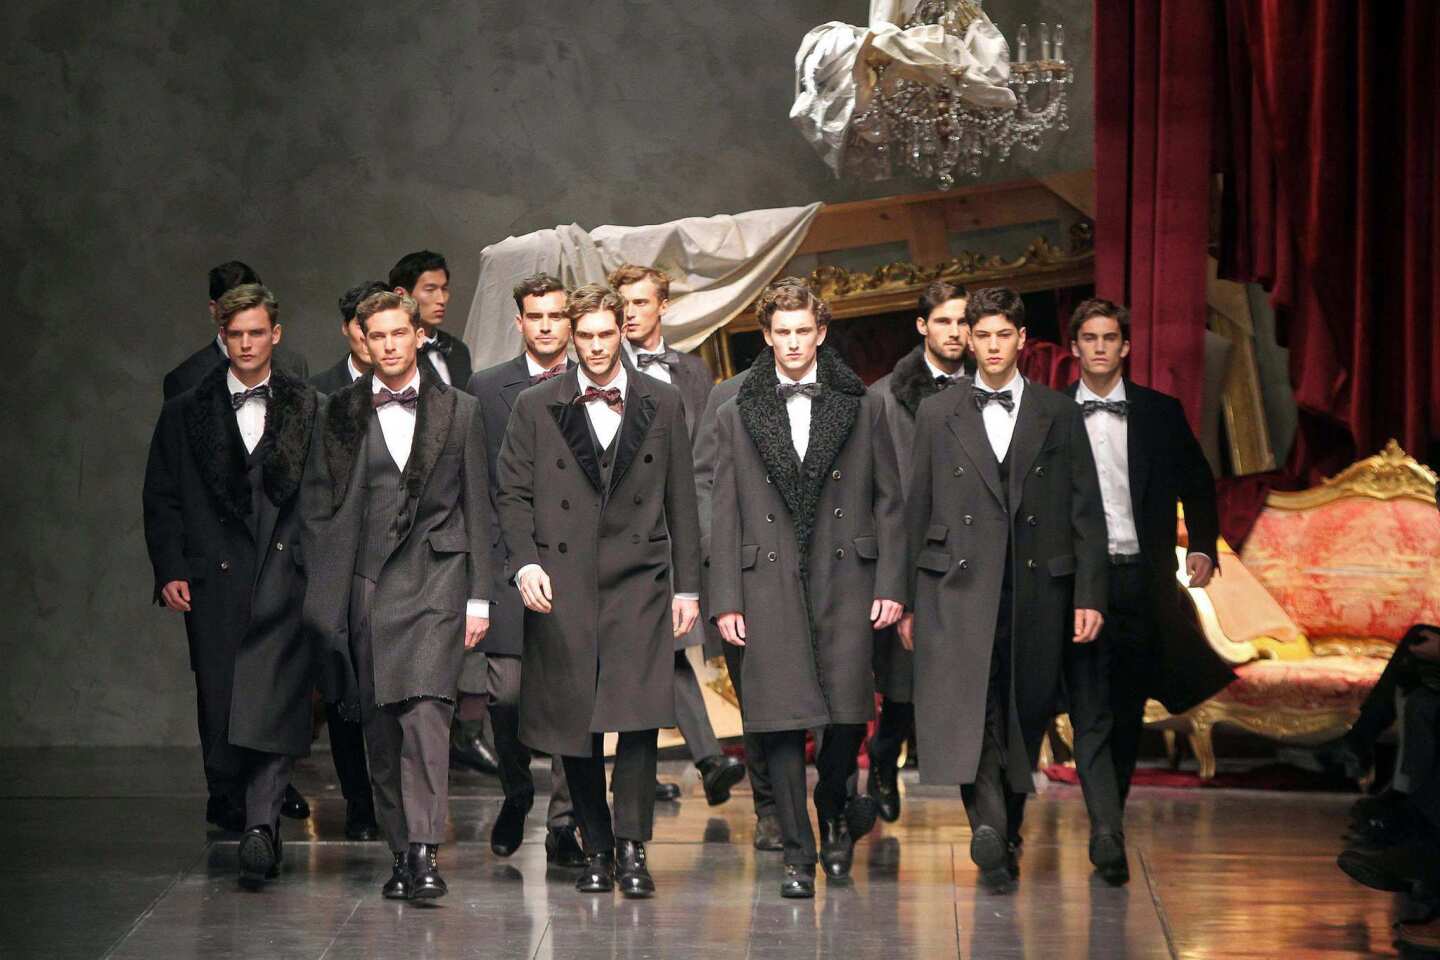 Milan Fashion Week Men's Collections F/W 2012 - Dolce & Gabbana